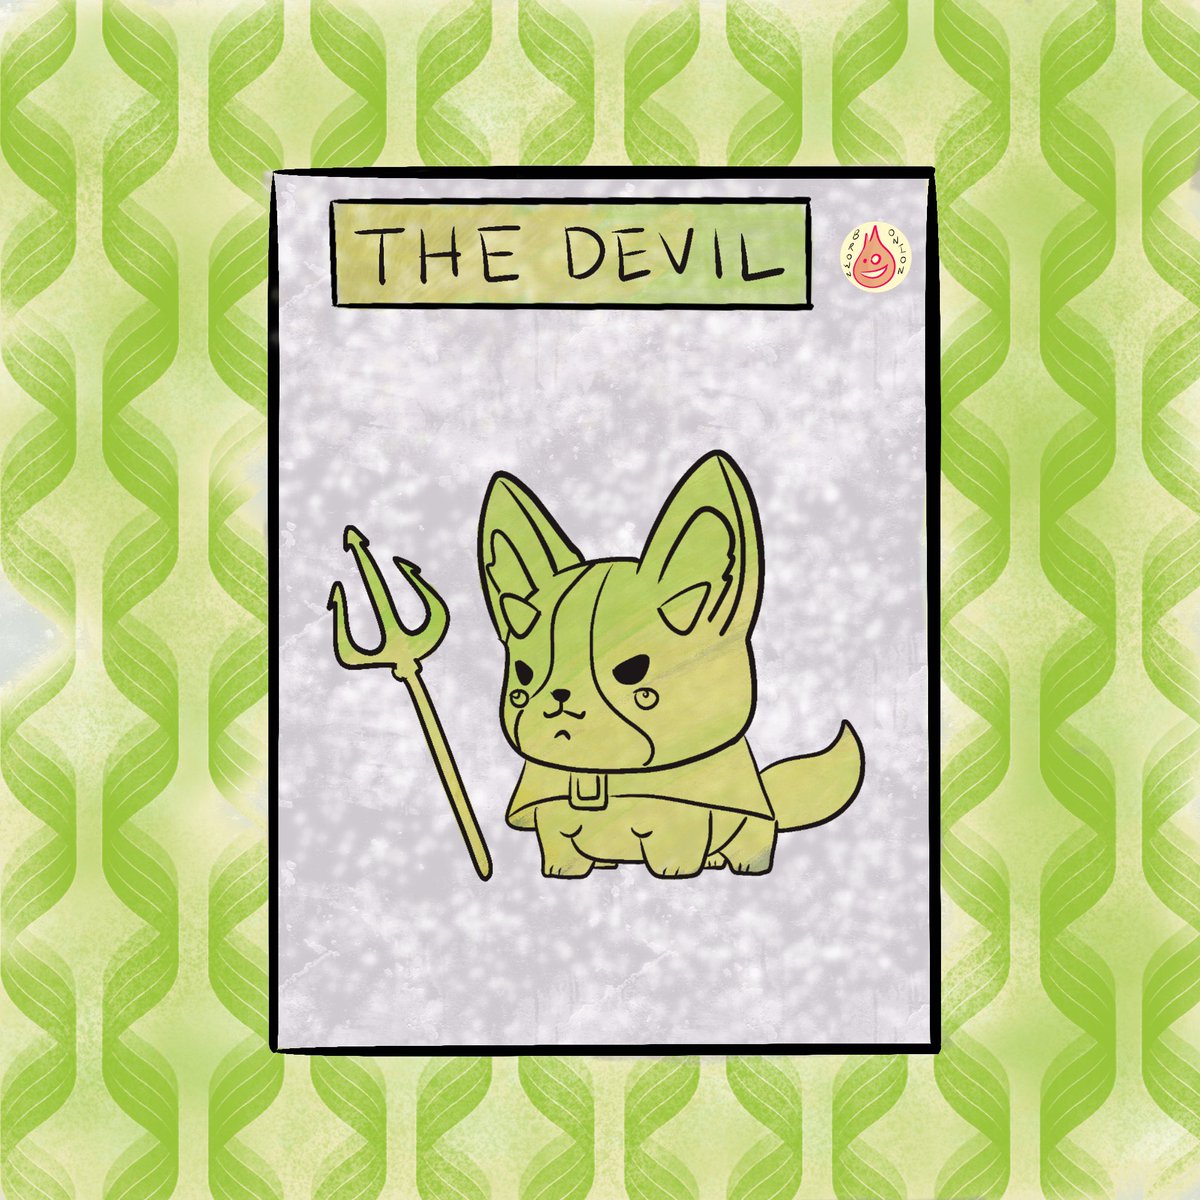 #Tarot #thedevil #devil #dog #kawaii #KawaiiGaming #Neko #AnimalCrossing #boardgame #2dart #2D #2DgameArt